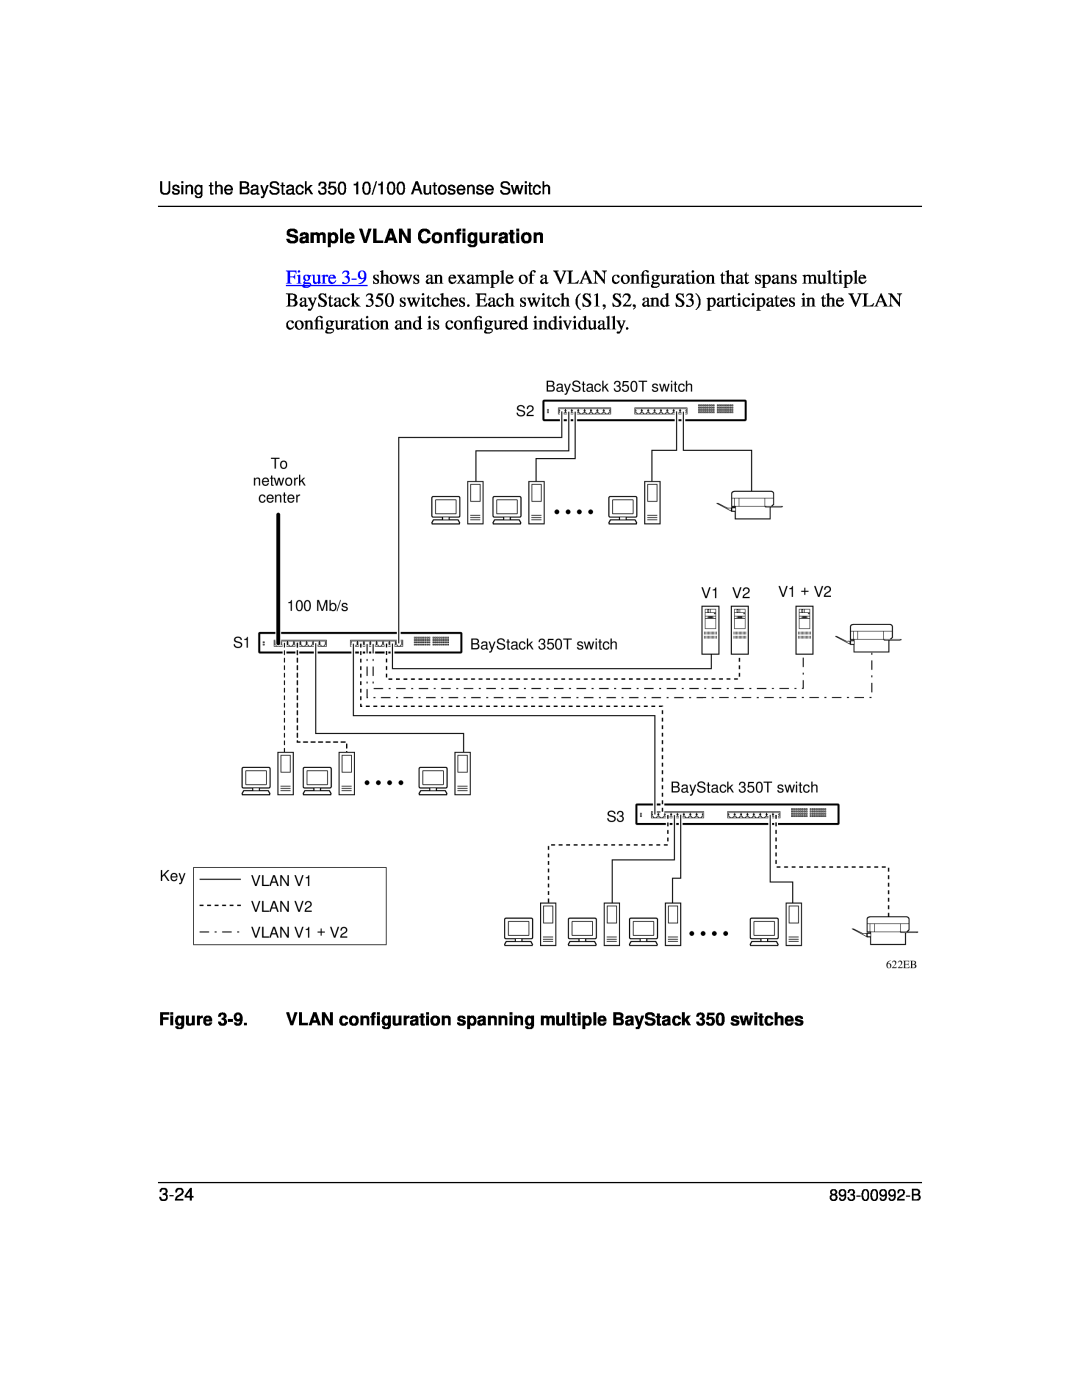 Bay Technical Associates manual Sample VLAN Conﬁguration, Using the BayStack 350 10/100 Autosense Switch, 3-24 